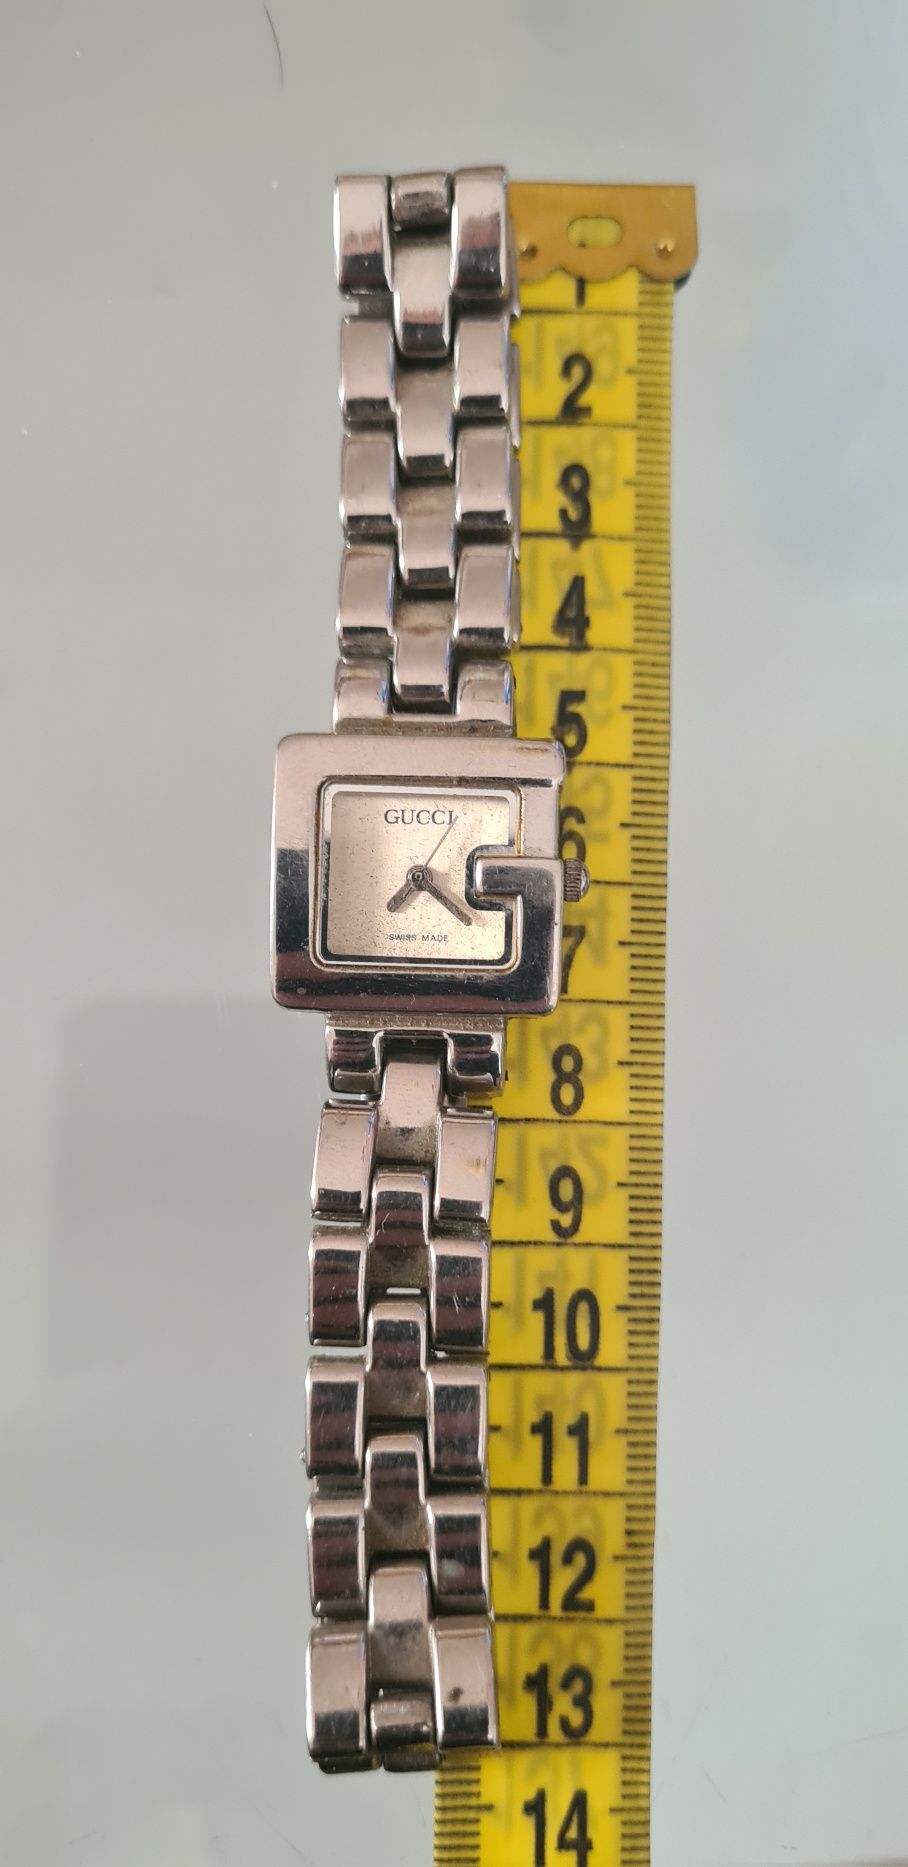 Oryginalny Zegarek GUCCI 3600m G watch